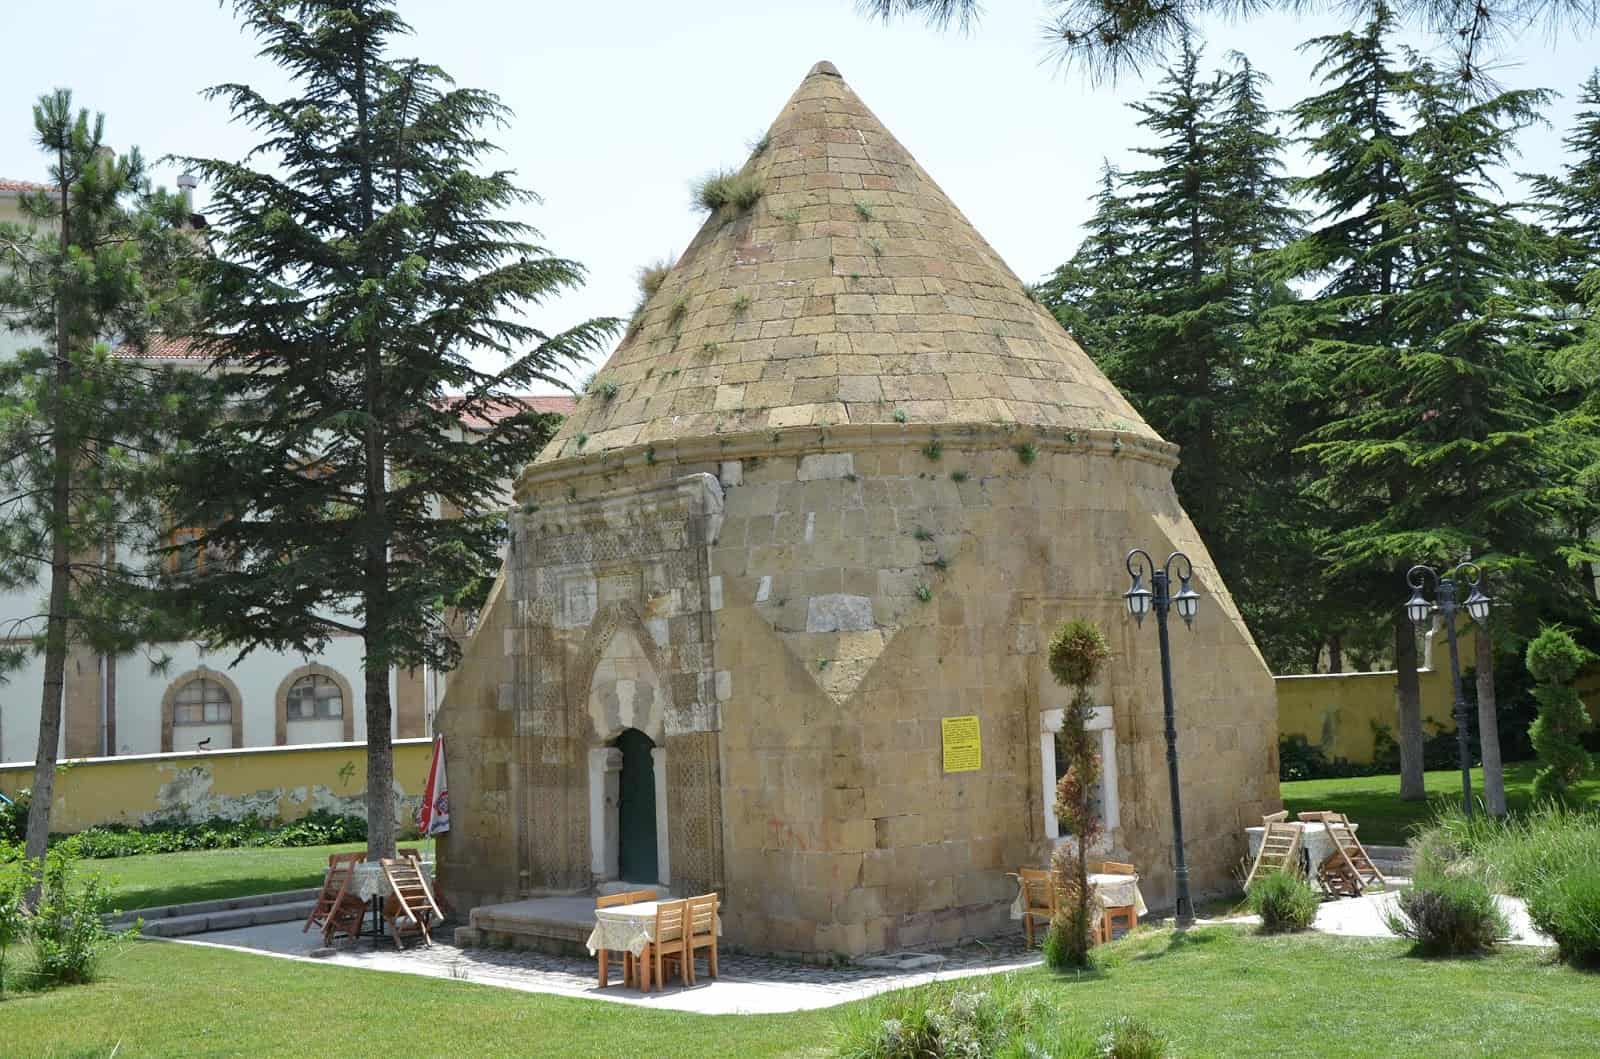 Gündoğdu Tomb in Niğde, Turkey